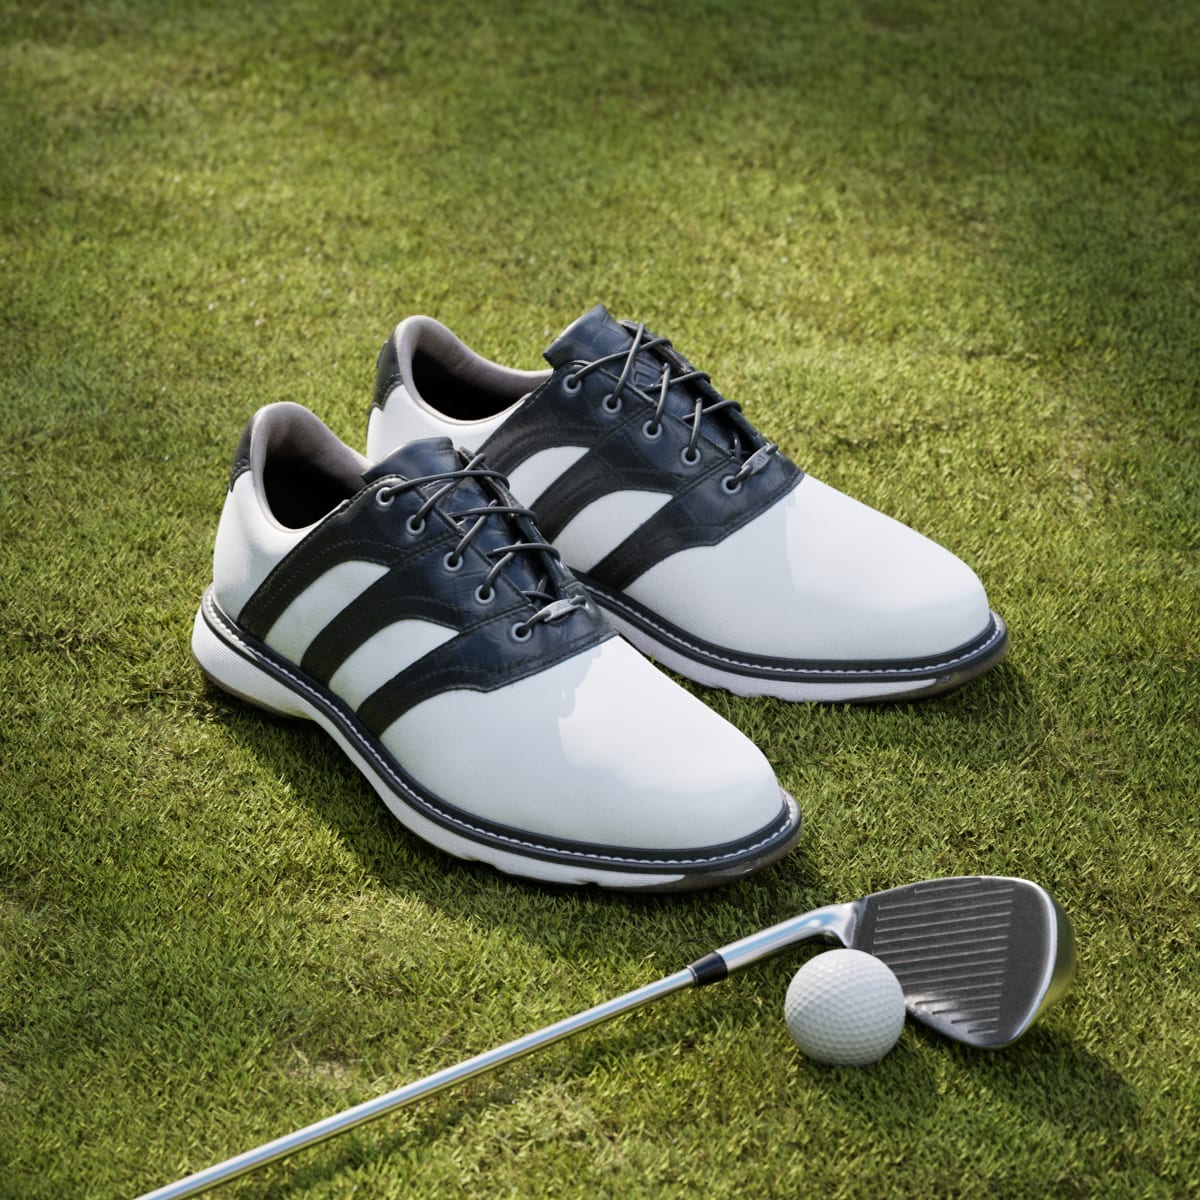 Adidas MC Z-Traxion Spikeless Golf Shoes. 4